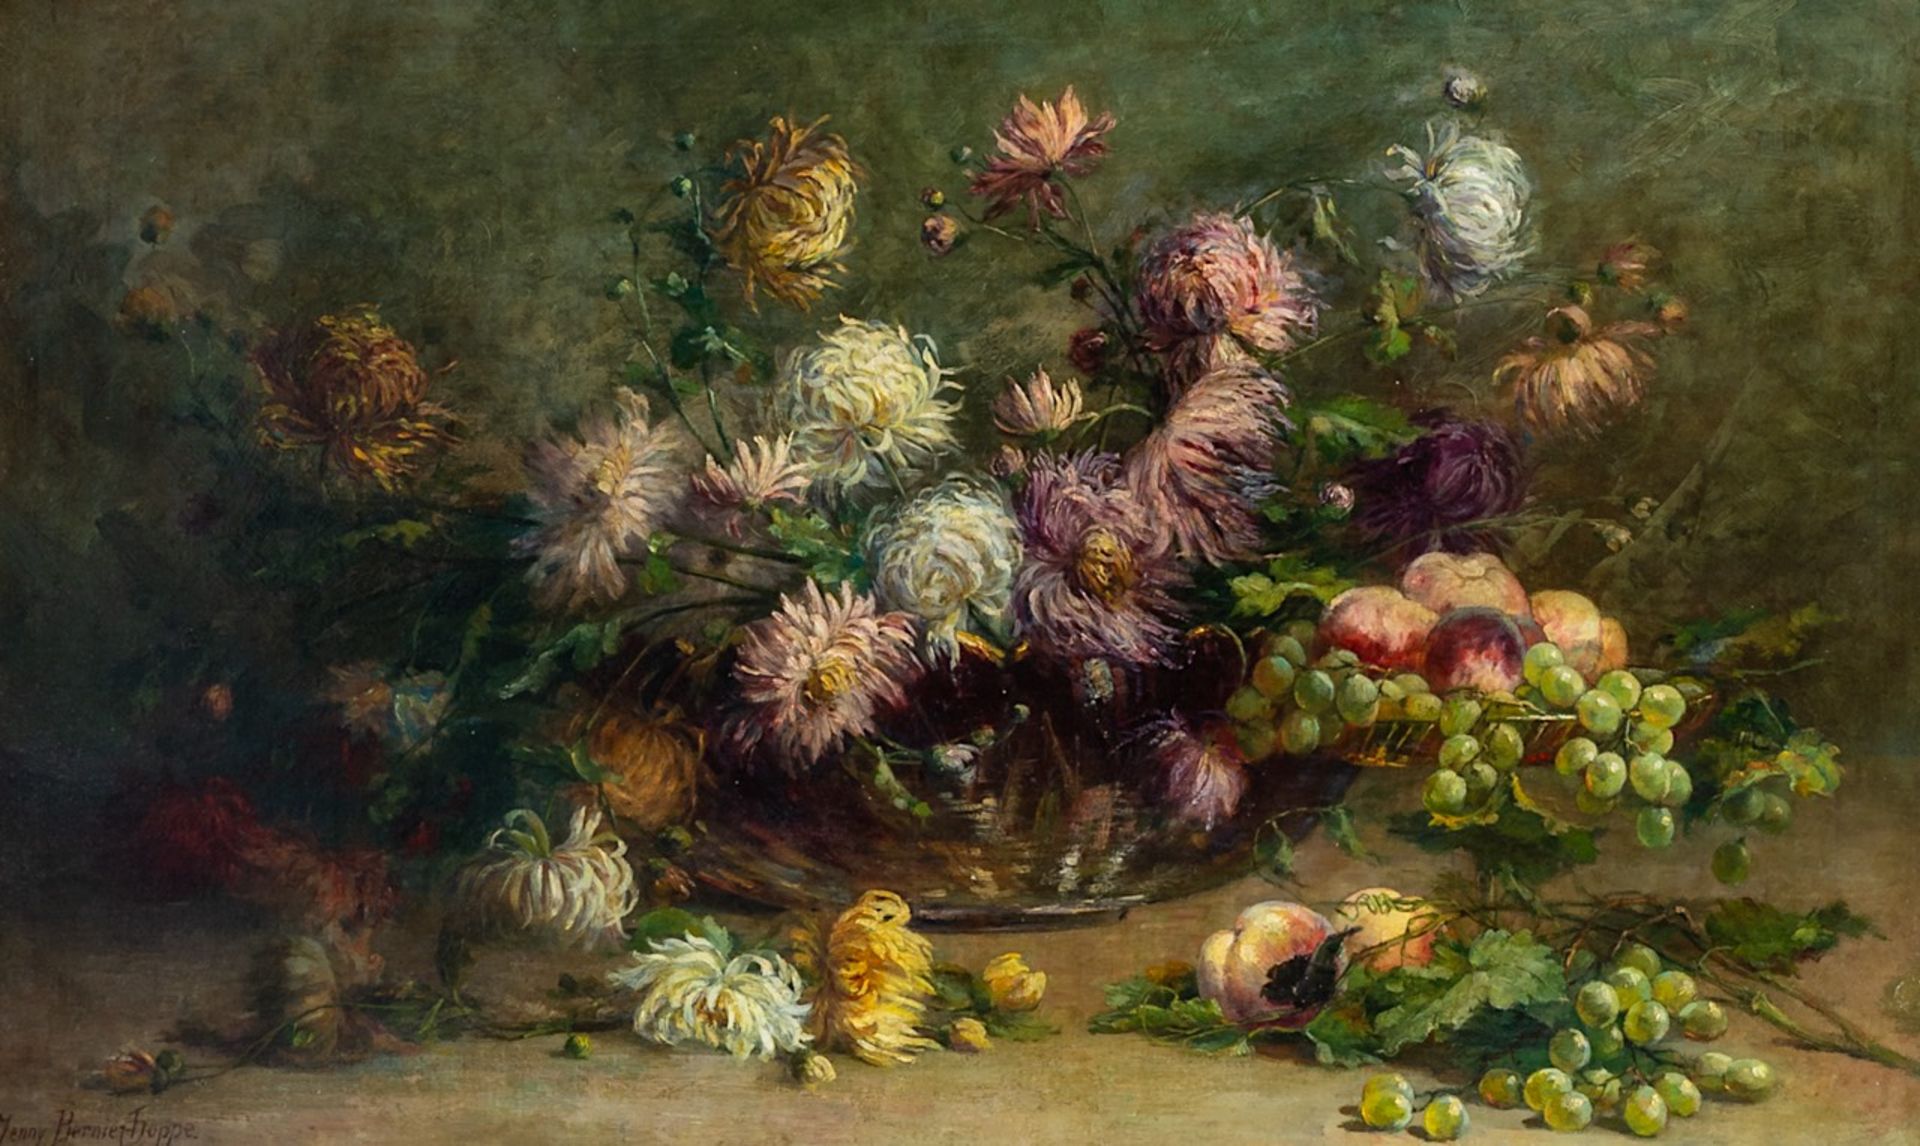 Jenny Bernier-Hoppe (1870-1934), flower still life, oil on canvas 65 x 105 cm. (25.5 x 41.3 in.), Fr